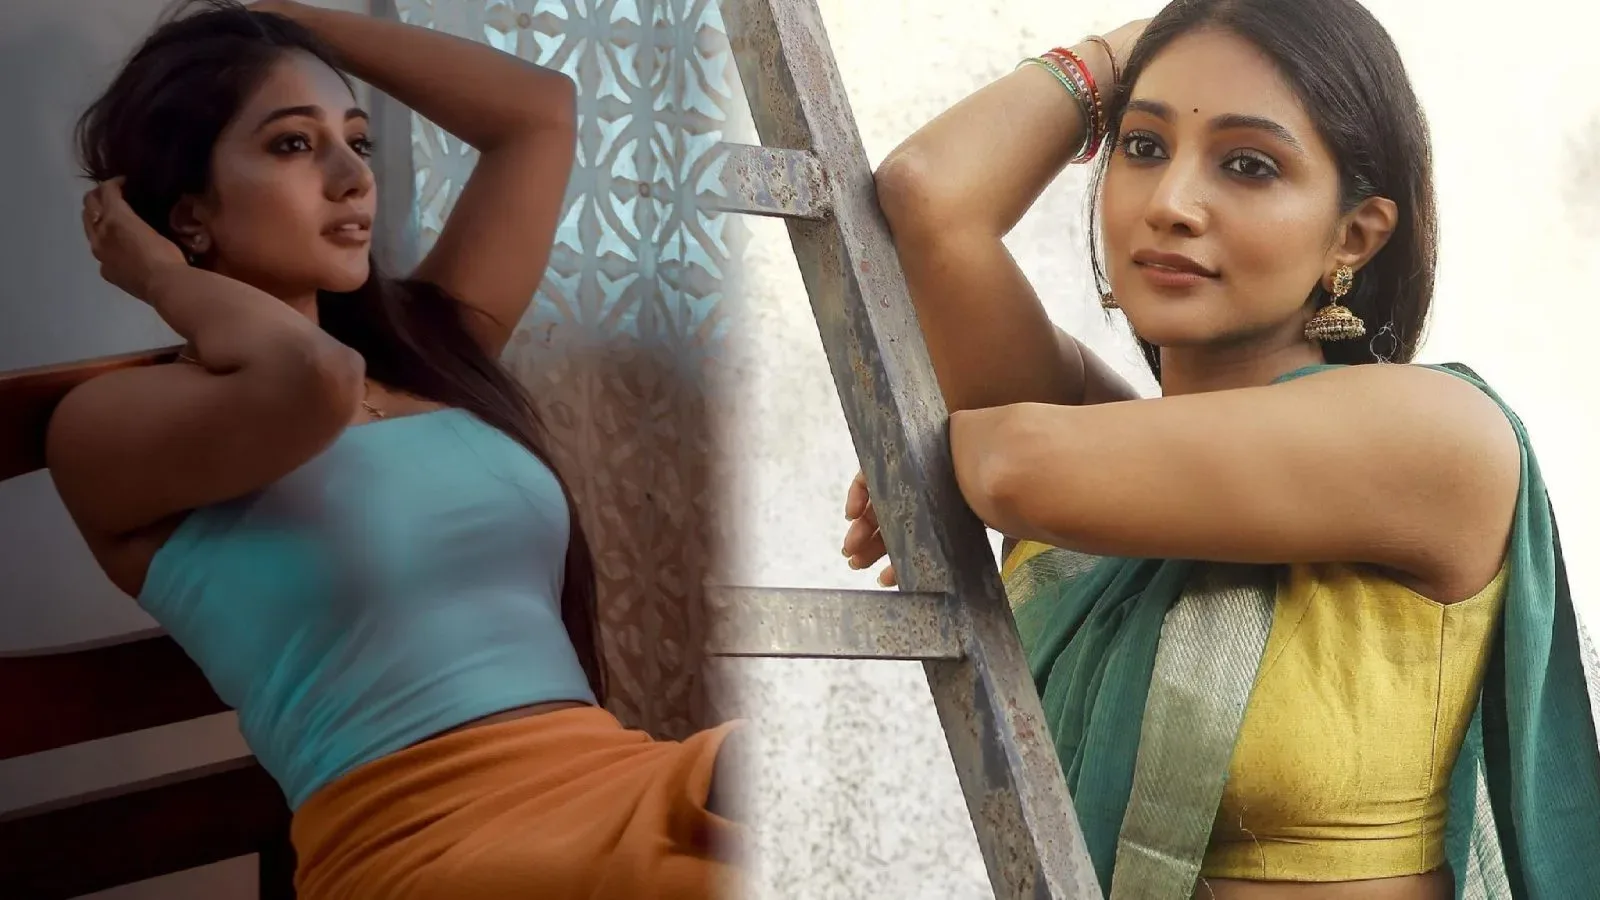 South Indian Actress Bommu Lakshmi hot and Stylish stills in Saree